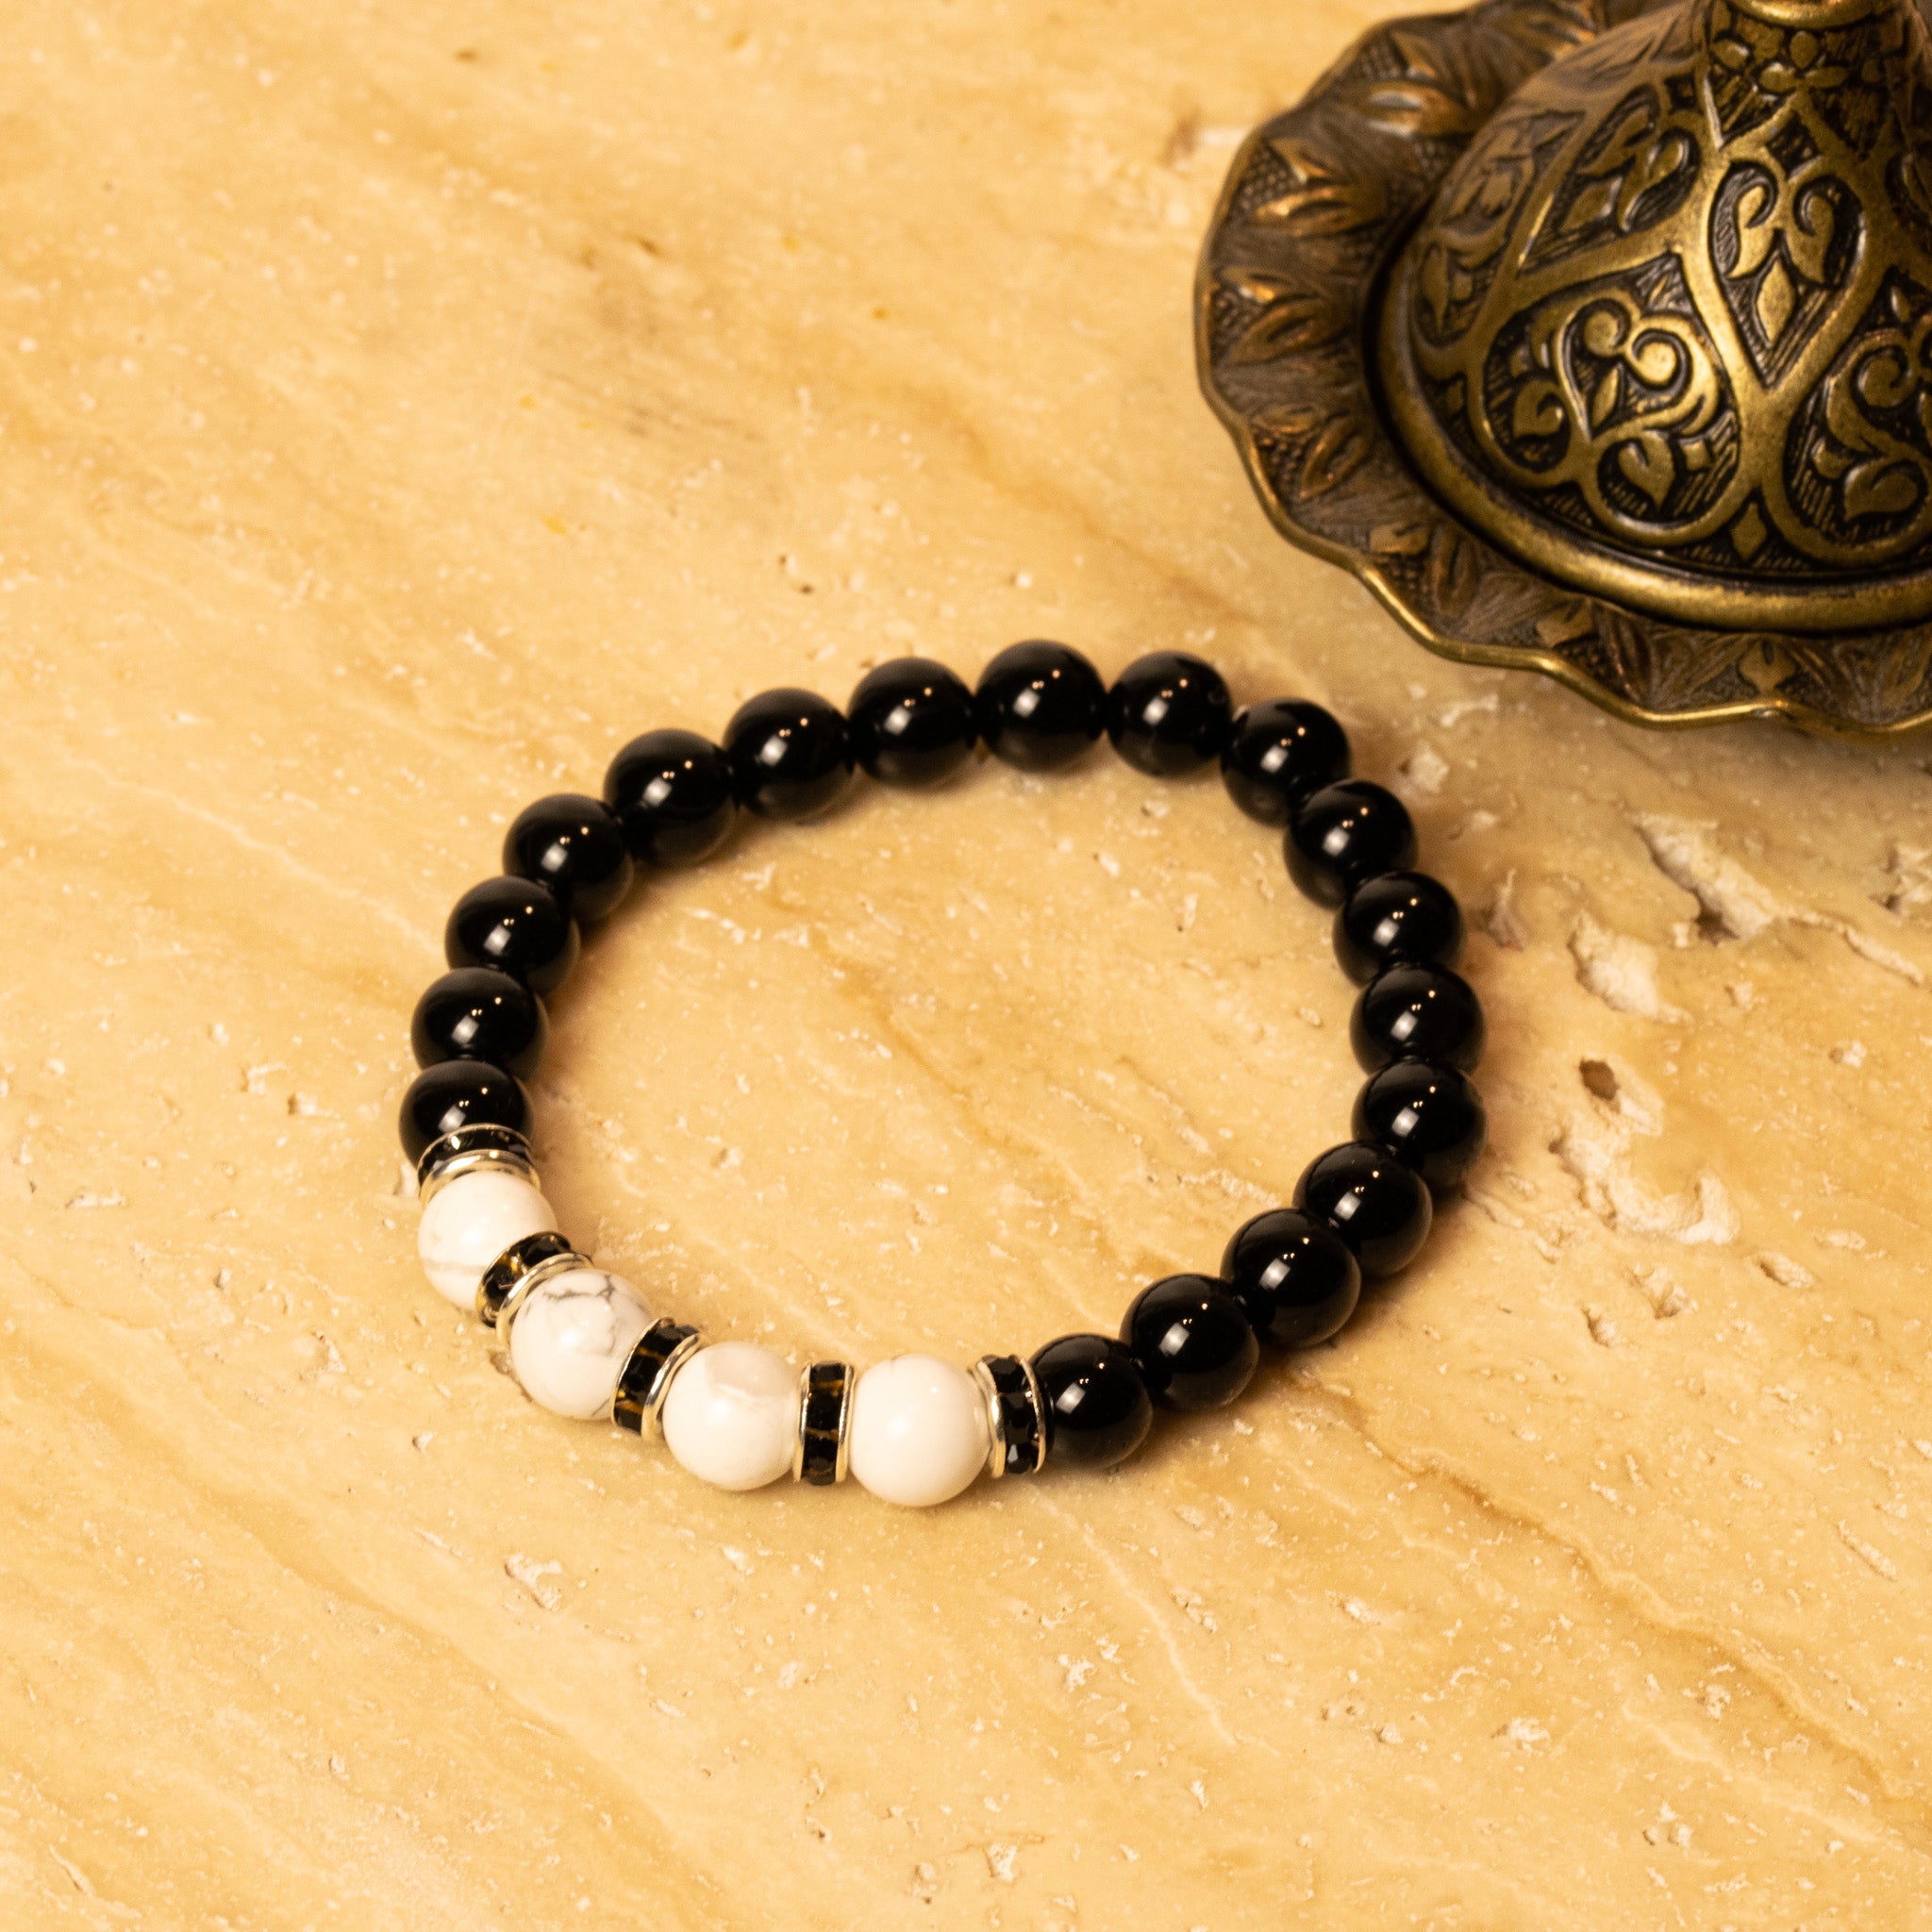 Black Tourmaline & Howlite Bracelet for protection, calmness & patience